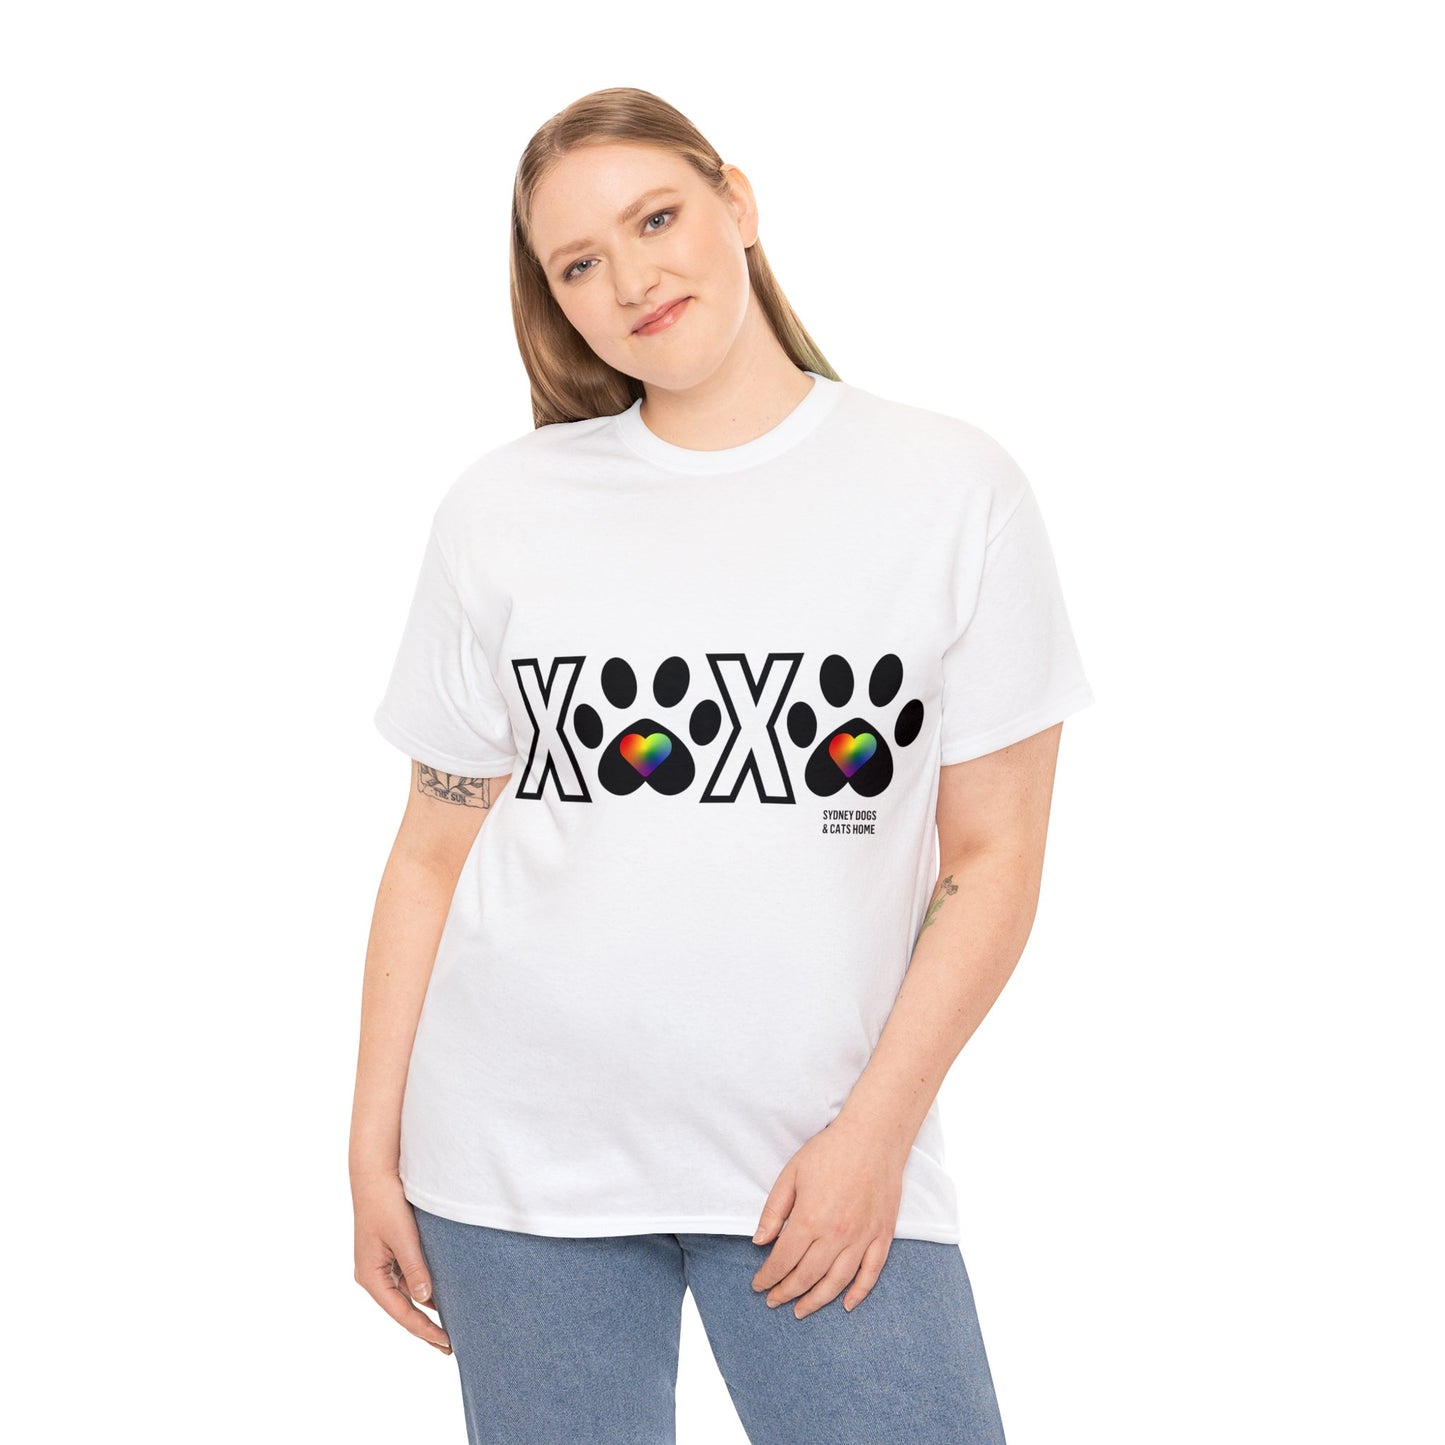 T-Shirt - XOXO (Pride Collection)